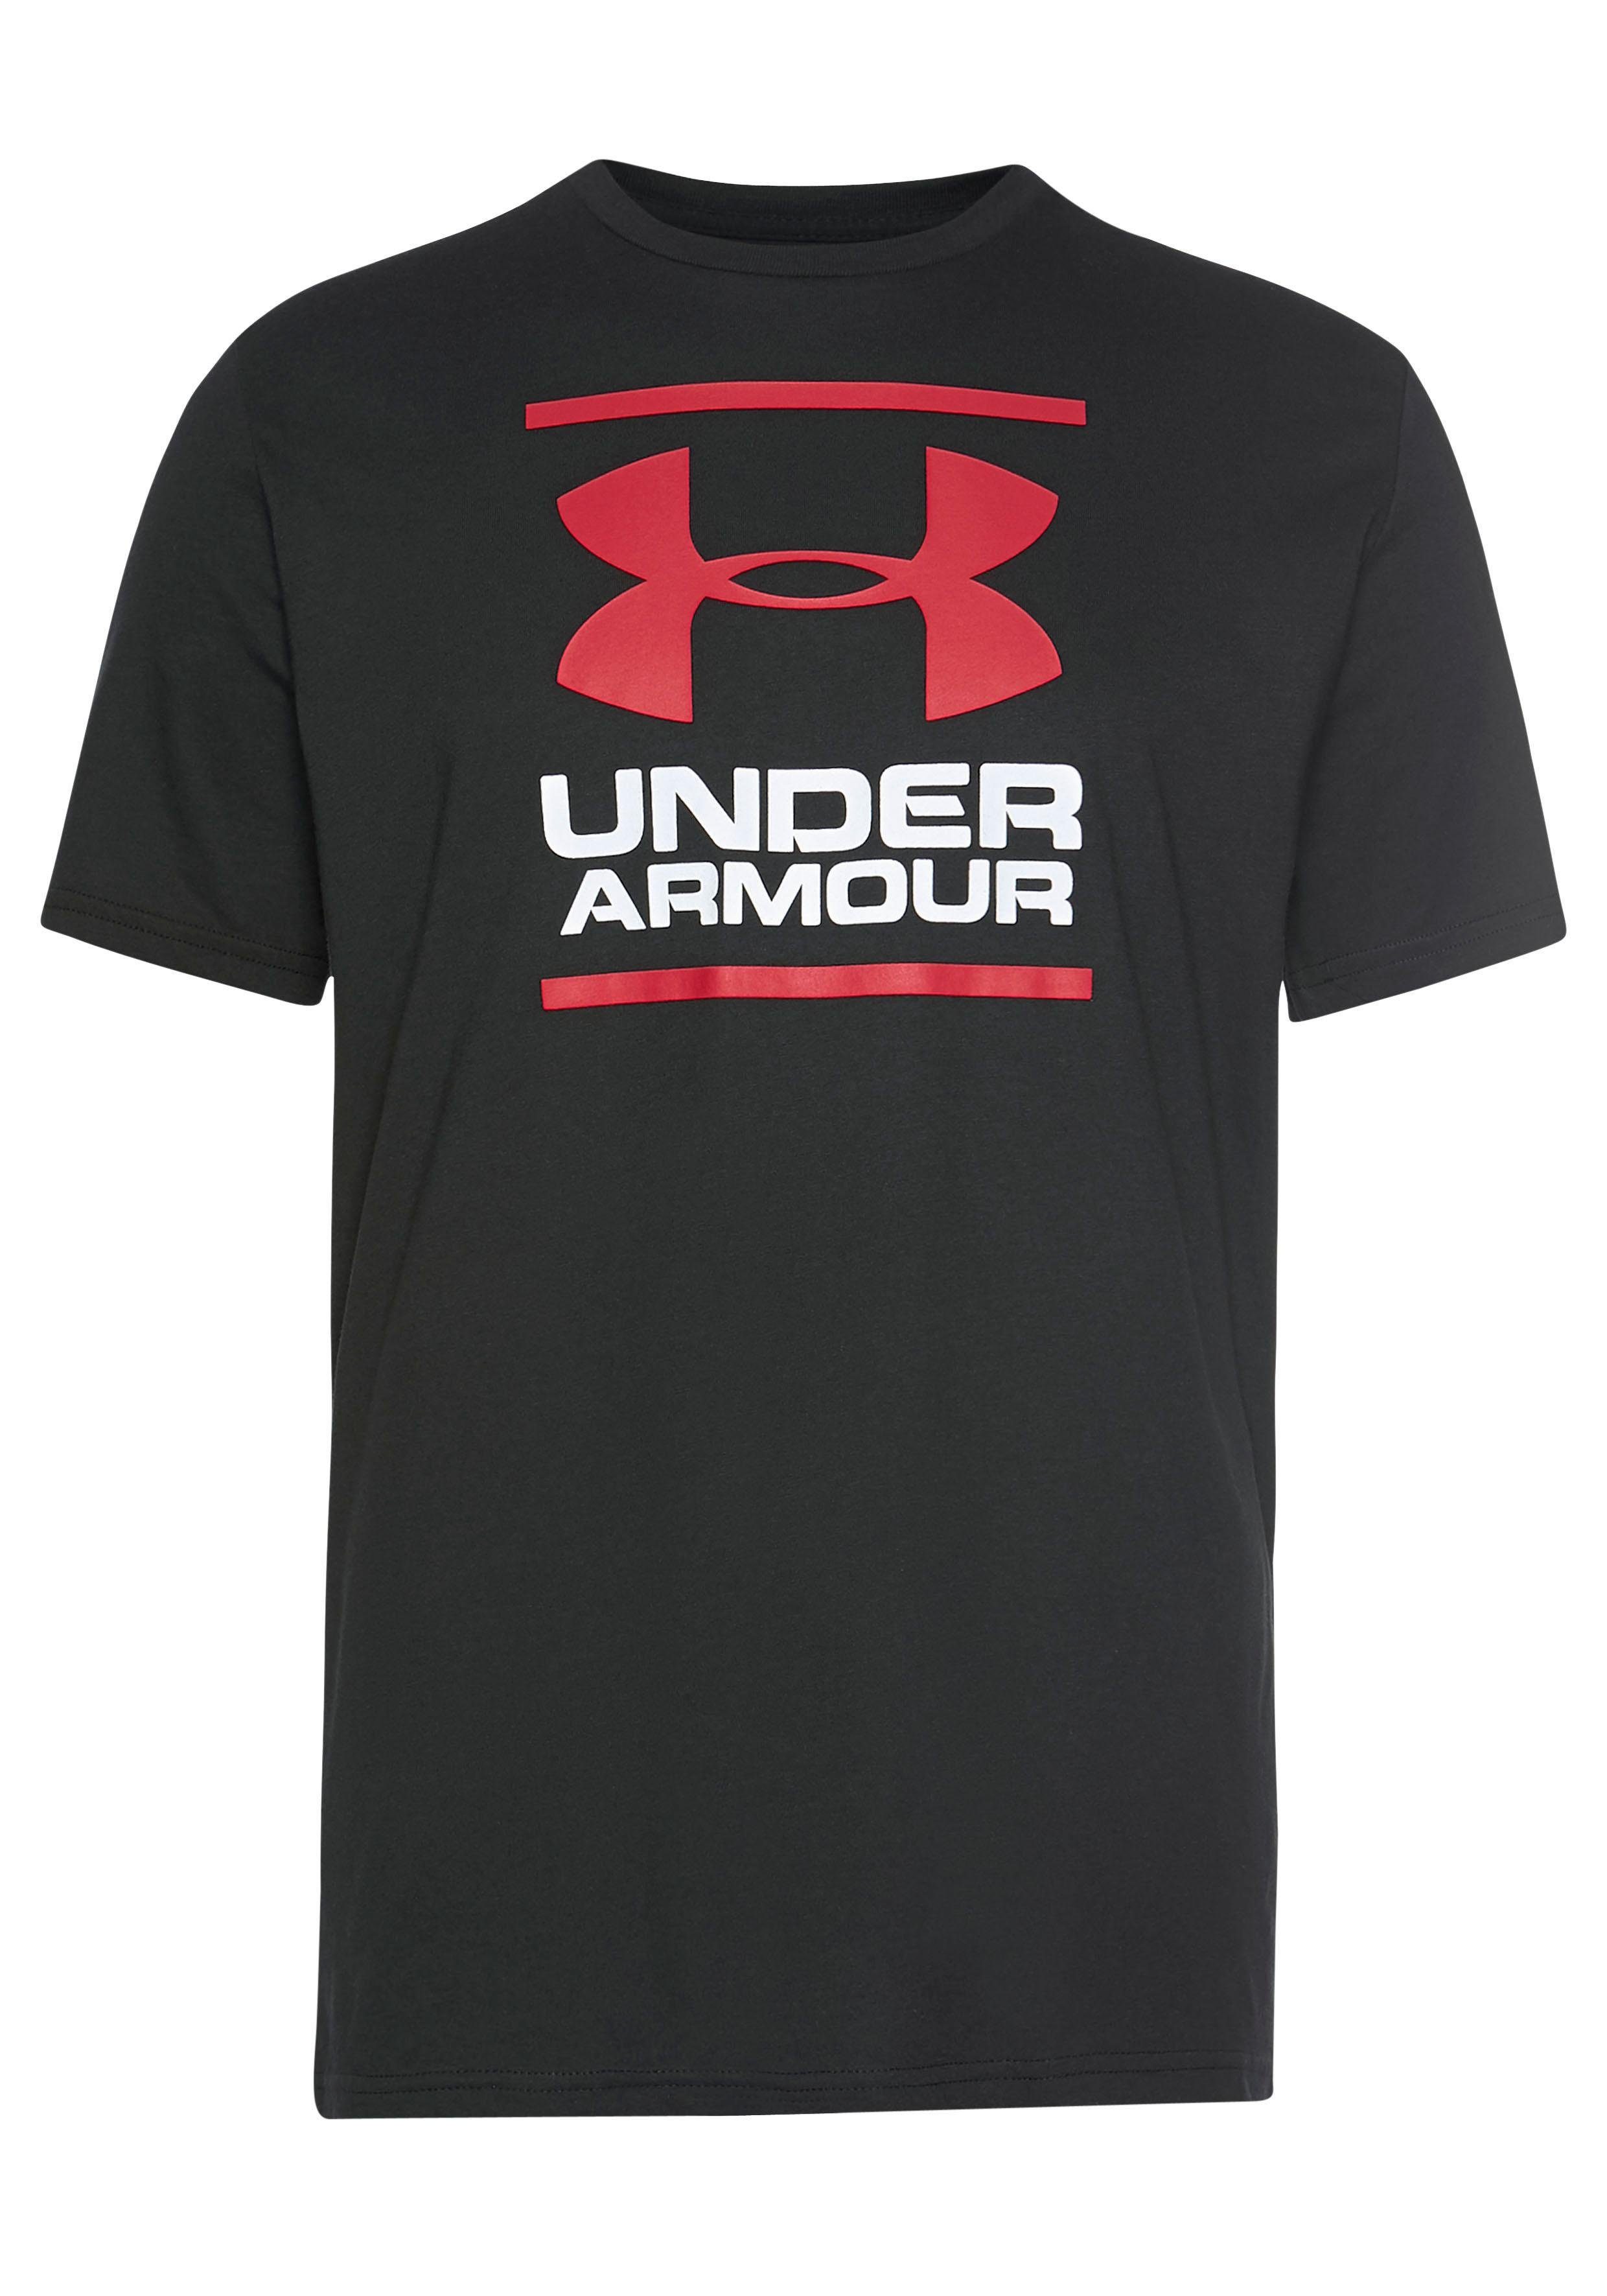 T-Shirt UA Under GL schwarz FOUNDATION SHORT SLEEVE Armour®